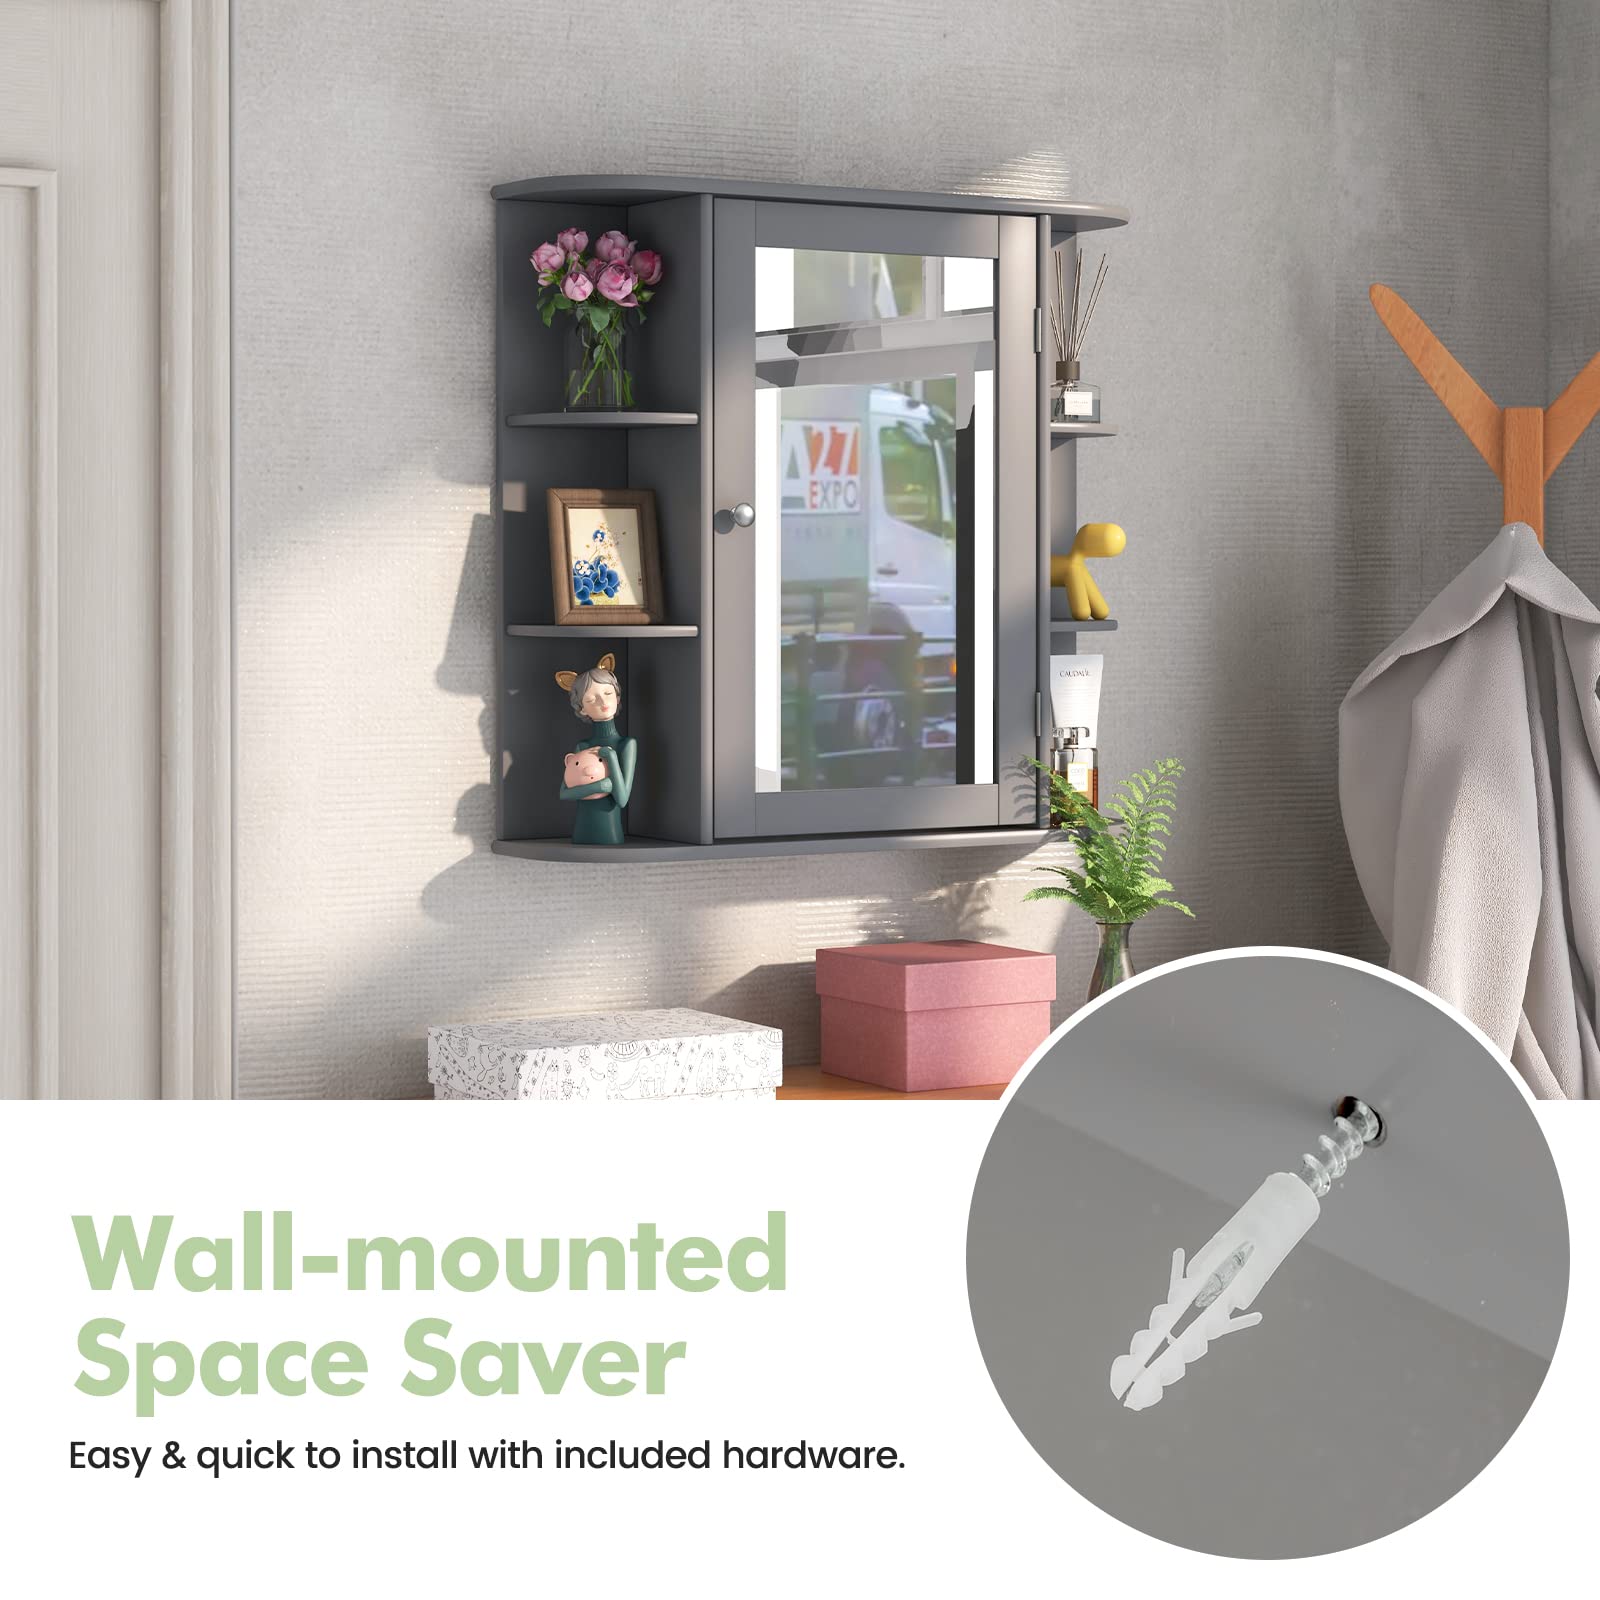 Giantex Mirrored Bathroom Medicine Cabinet - Wall Mounted Bathroom Hanging Cabinet with Single Door